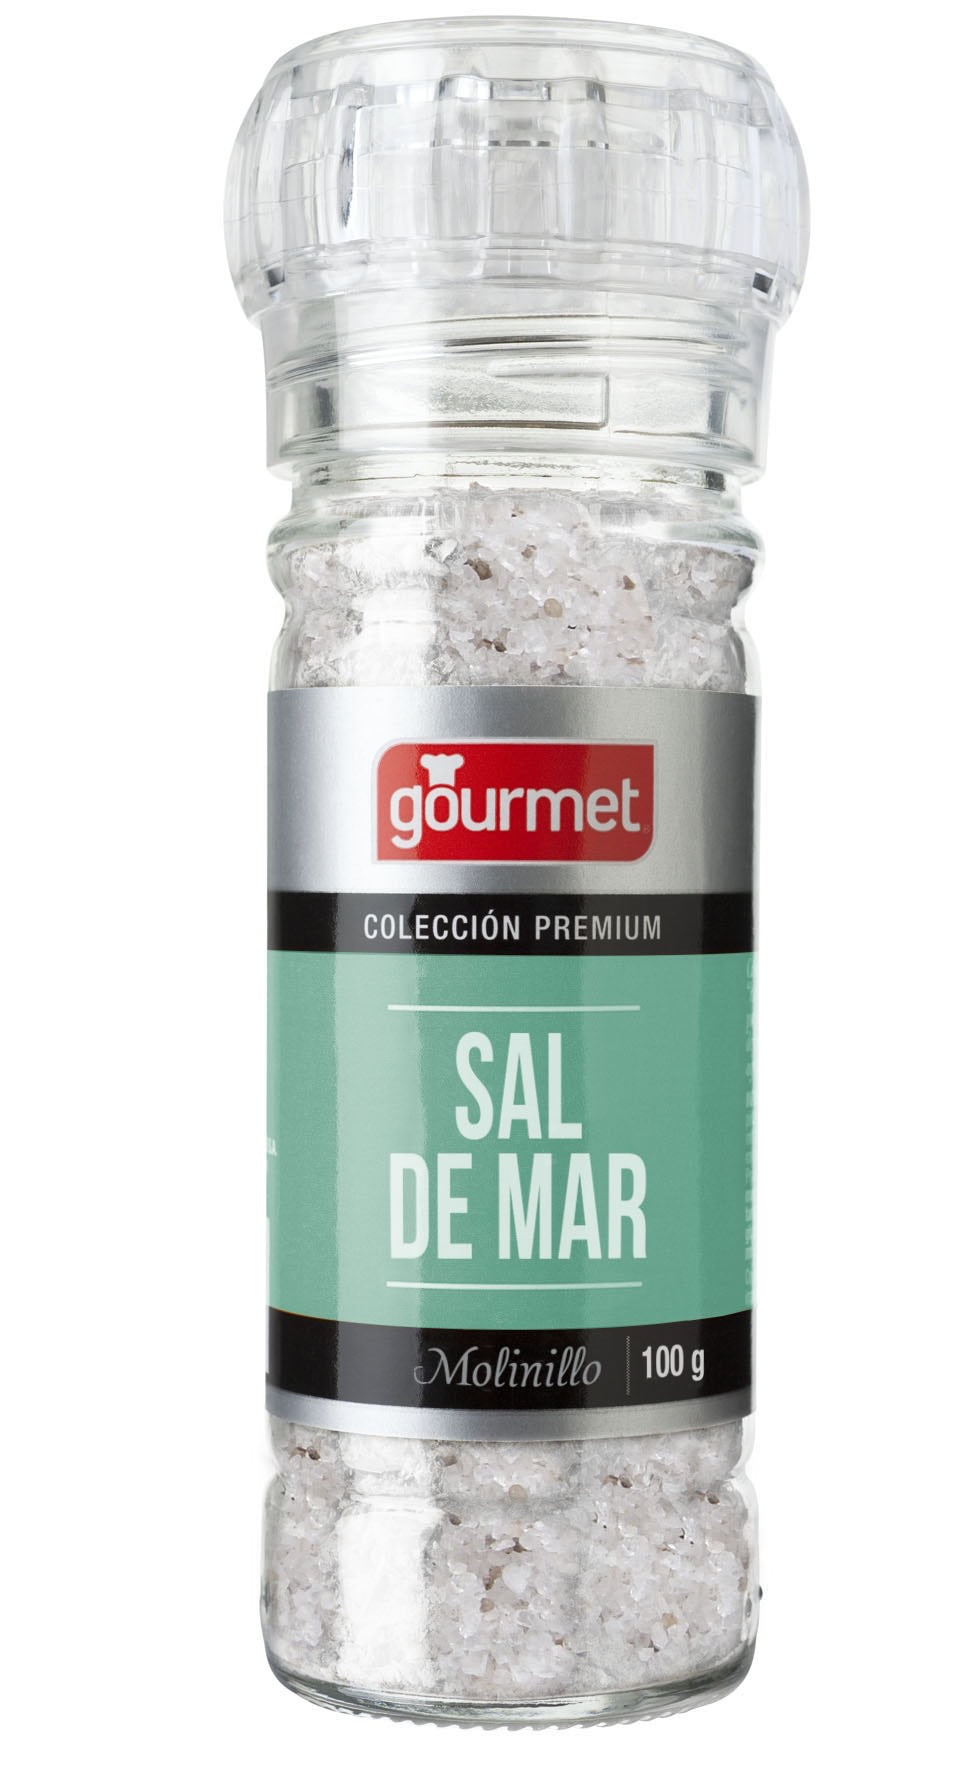 Molinillo sal de Mar en cristales, 100 grs, Gourmet